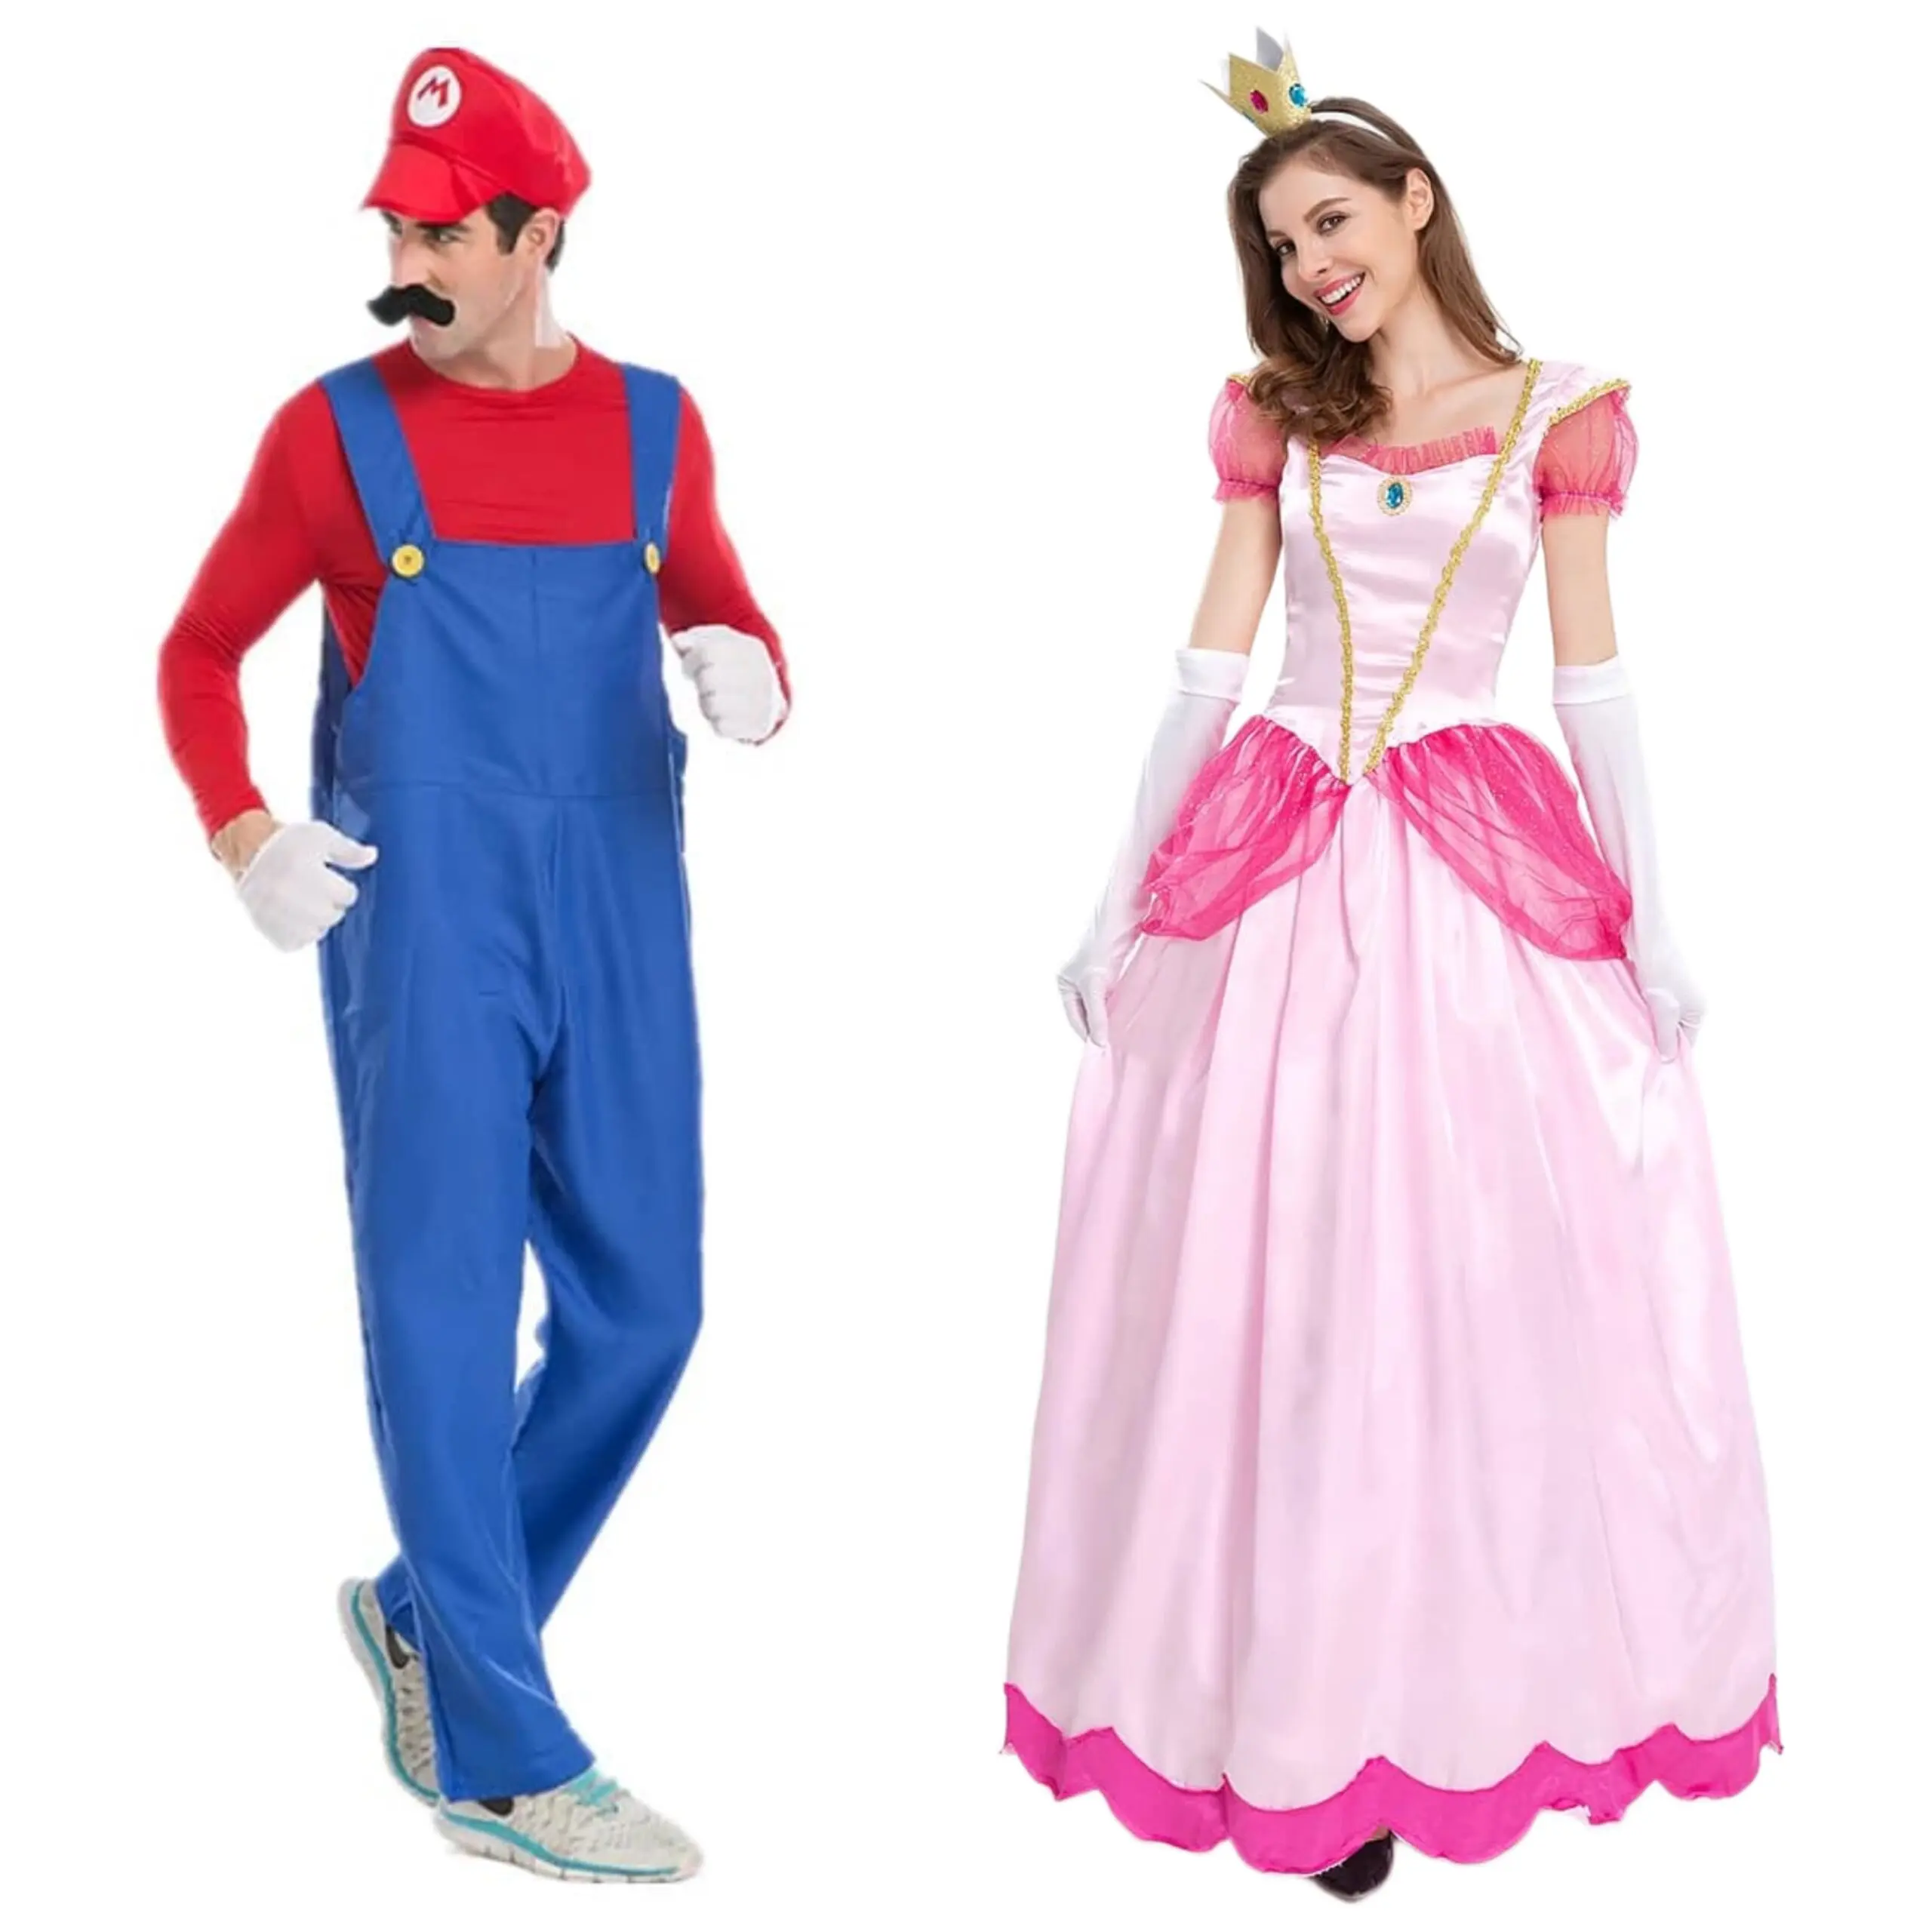 mario and peach costumes